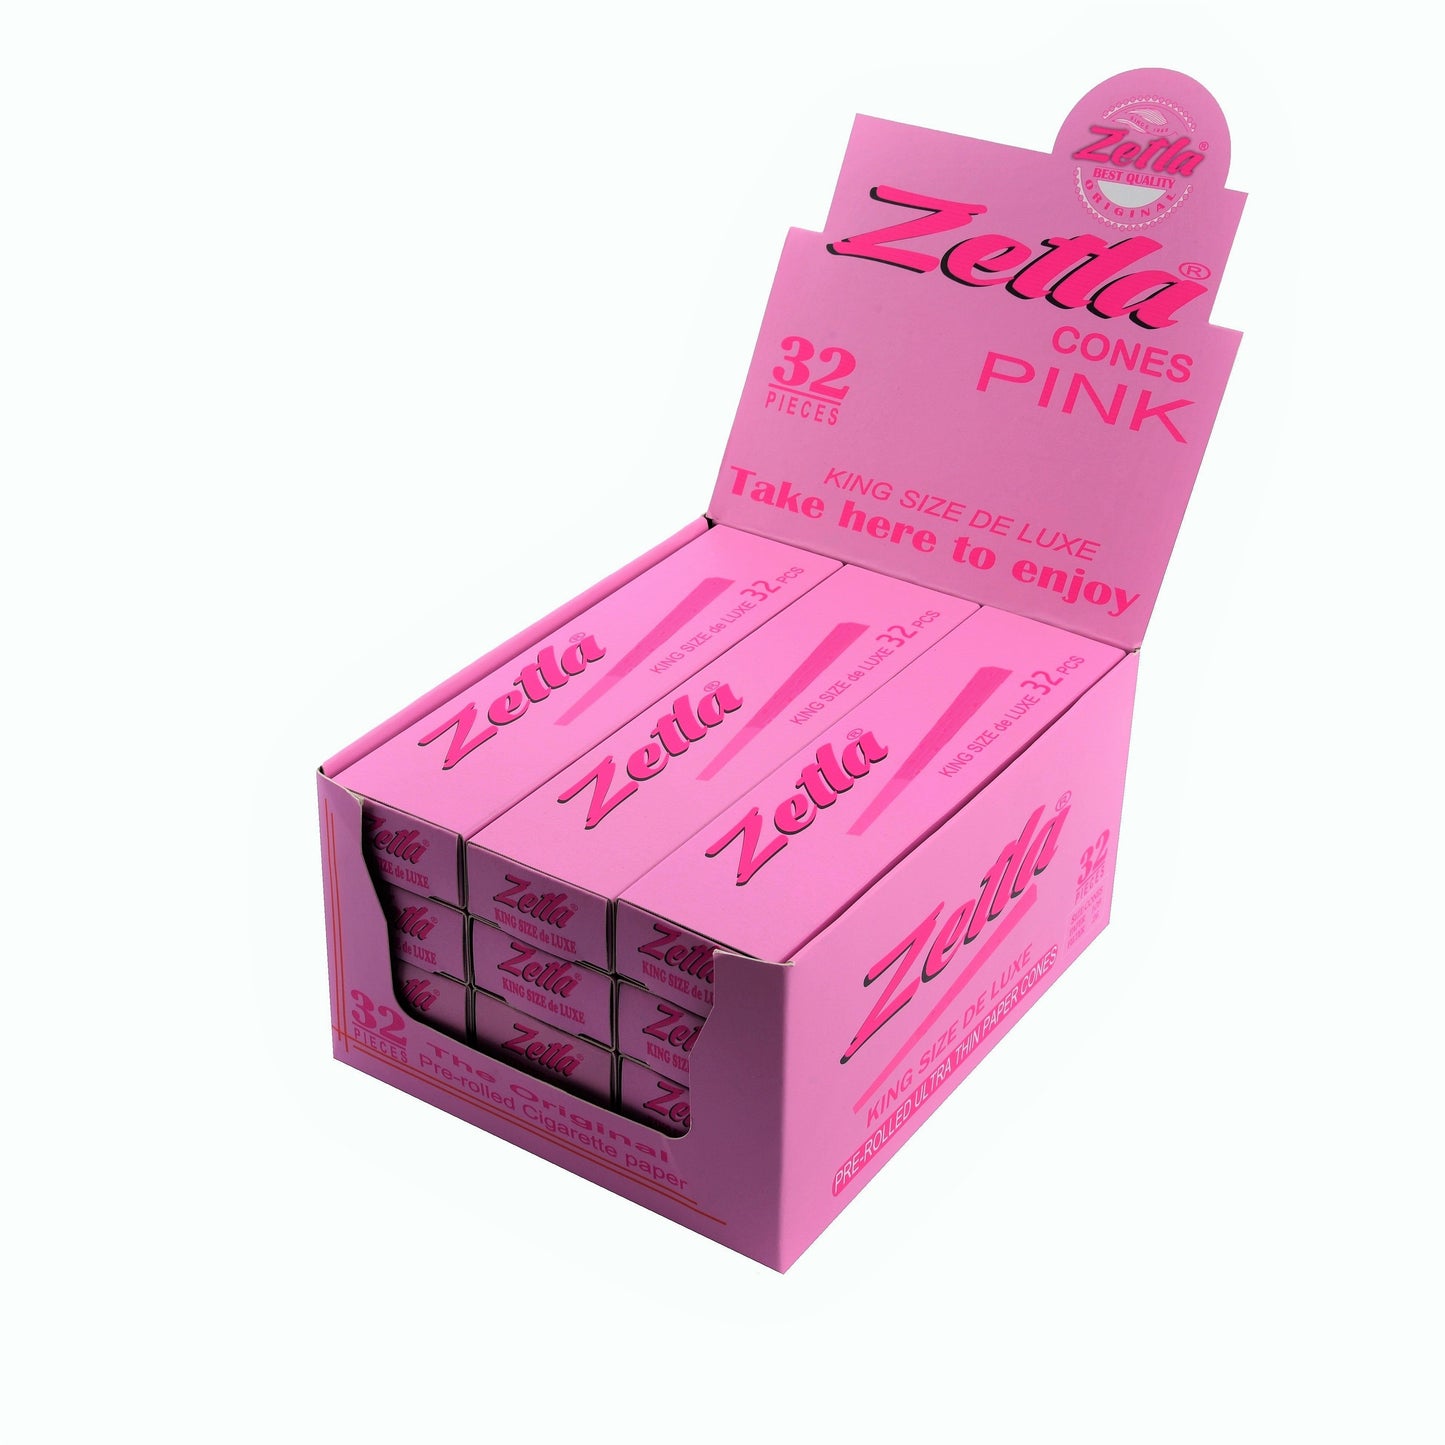 Pre Rolled Cones Zetla Pink King Size Deluxe (32 Pcs) - Zetla